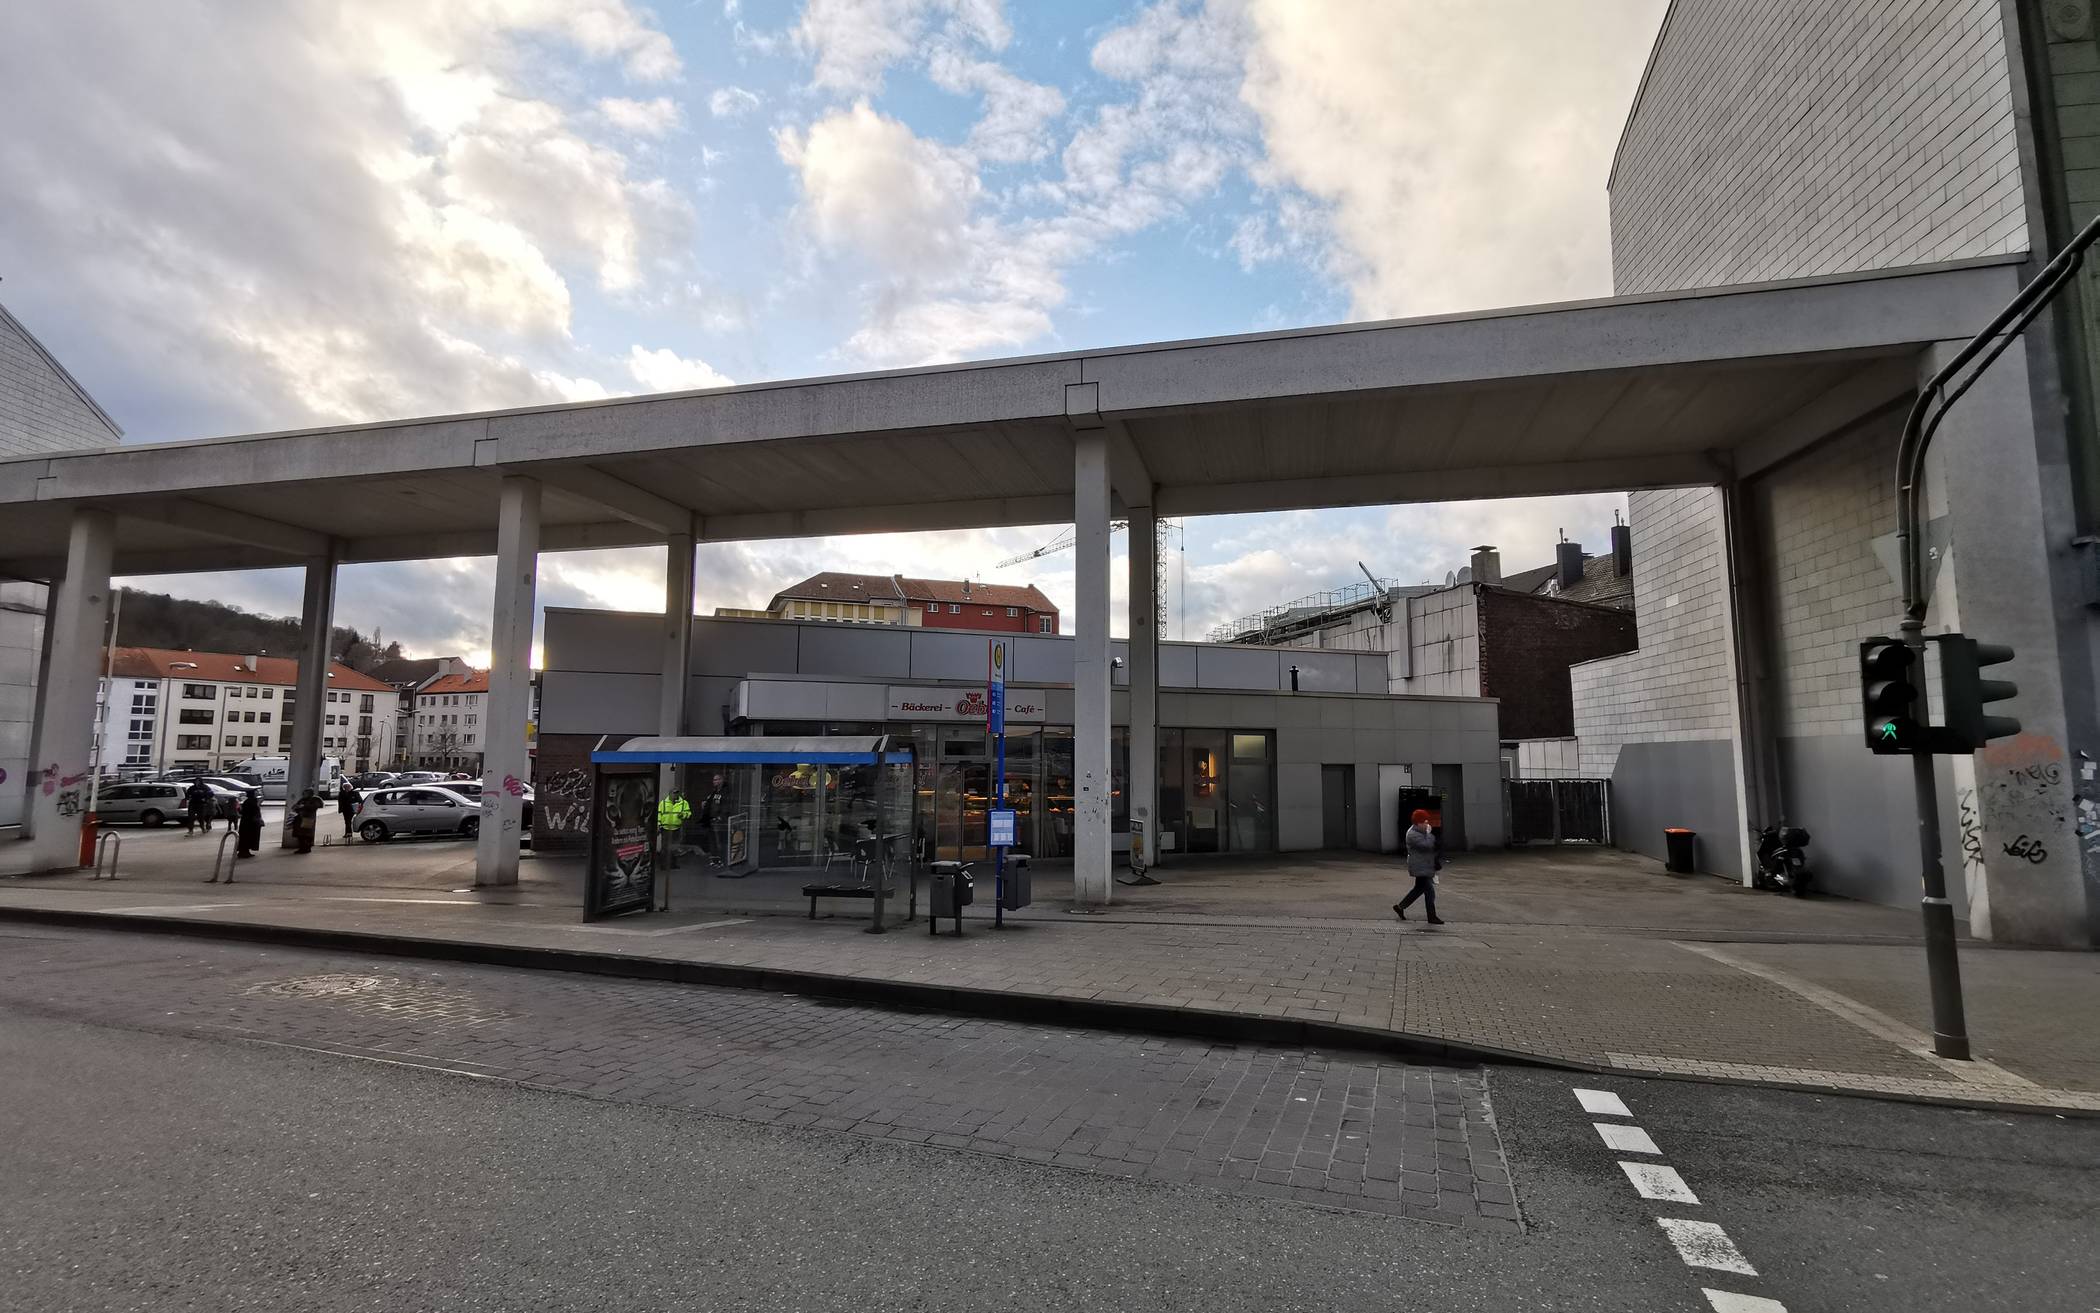  Steinbecker Tor in Wuppertal  